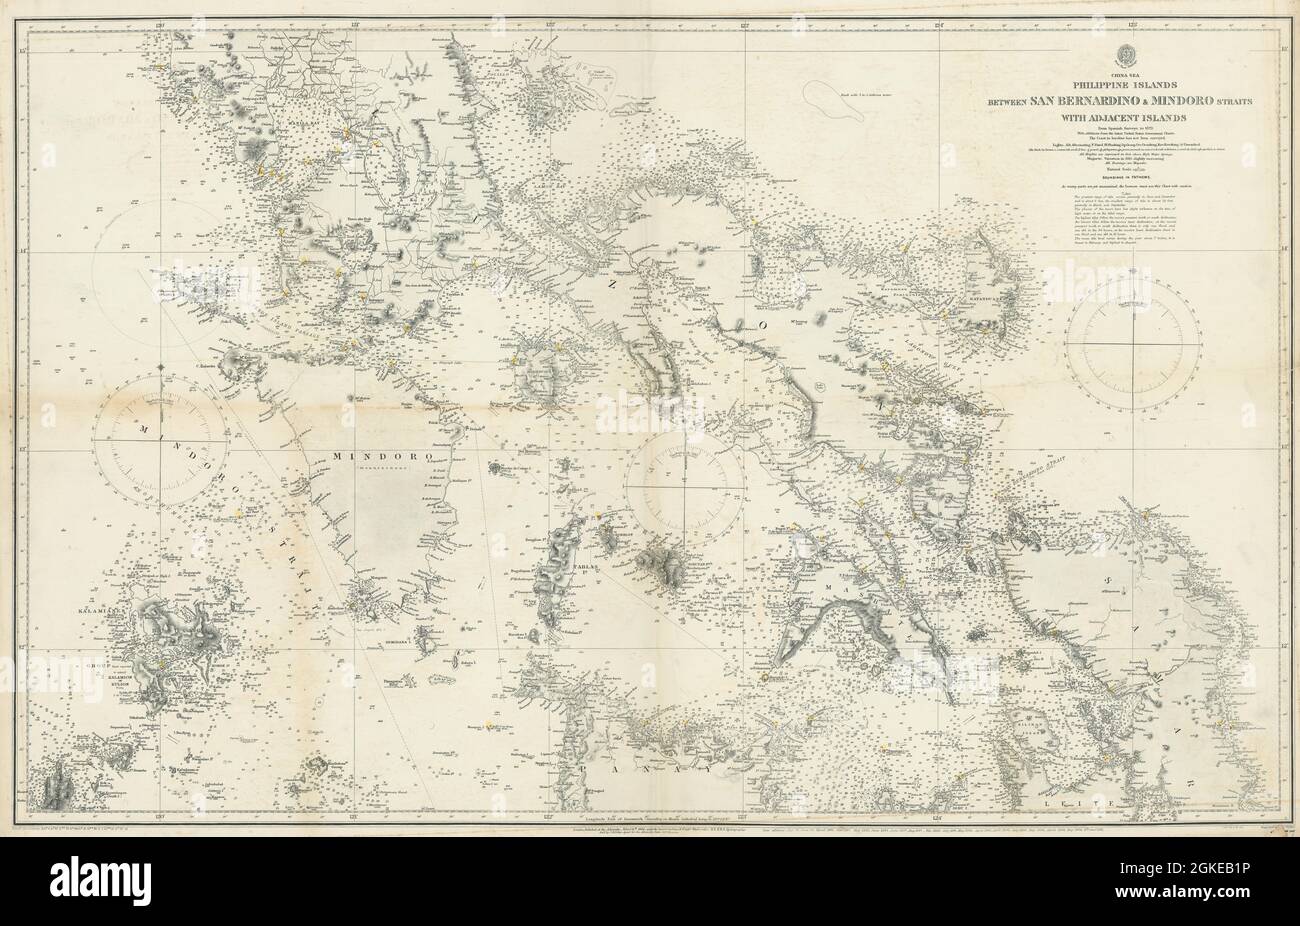 Filippine. Luzon Meridionale Mindoro Visayas. MAPPA DELL'ADMIRALTY Sea chart 1866 (1912) Foto Stock